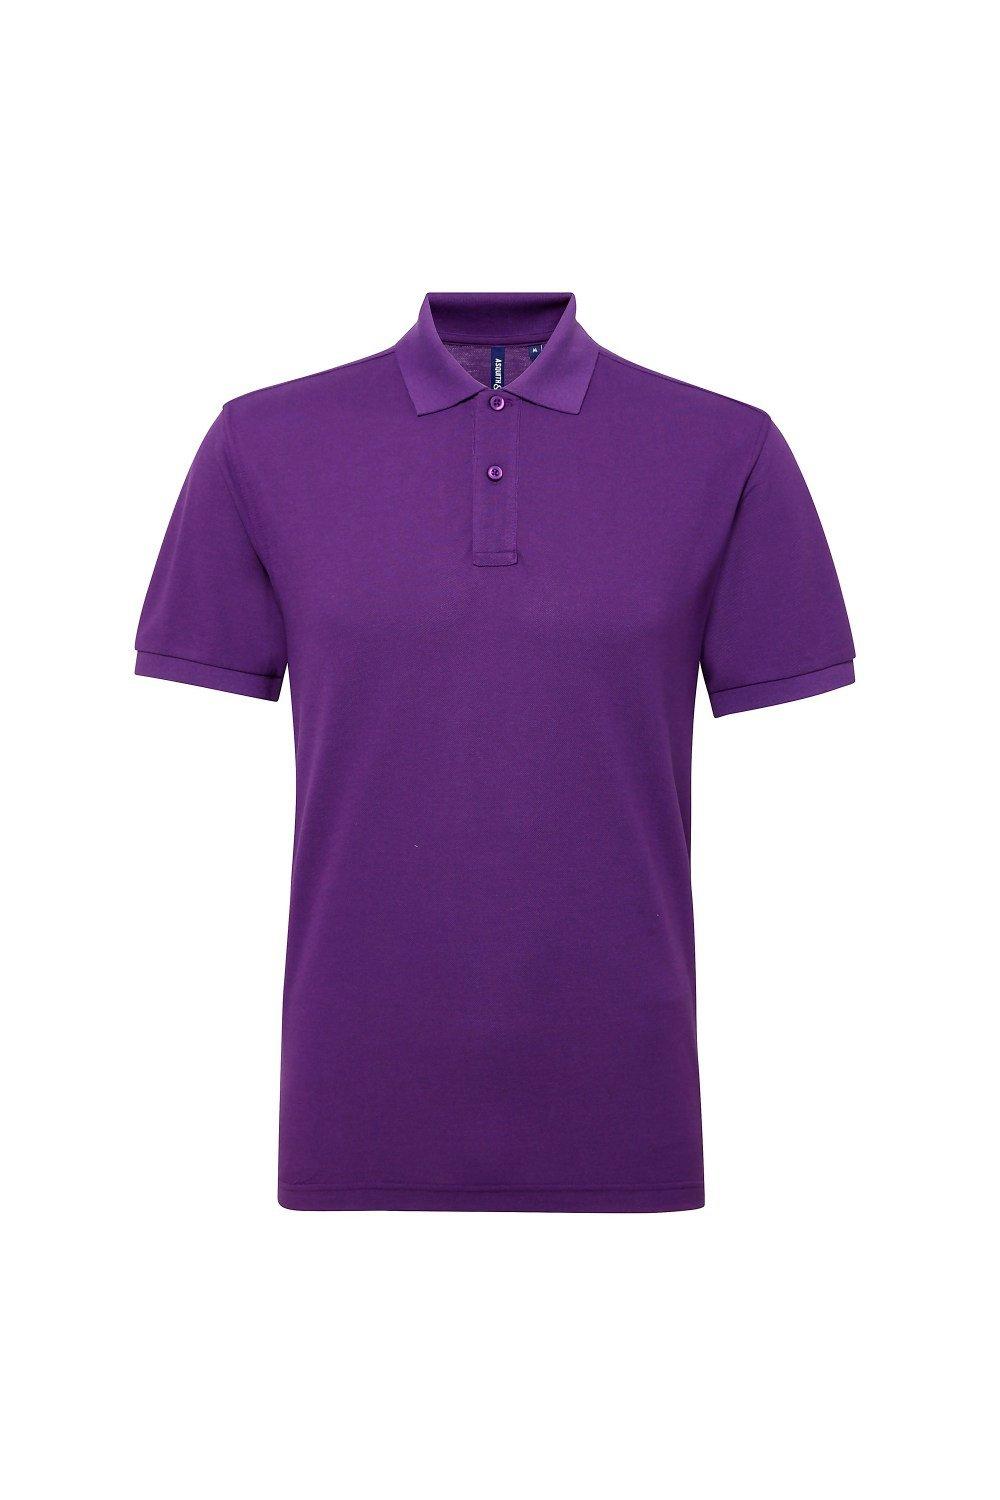 цена Рубашка поло Performance Mix с короткими рукавами Asquith & Fox, фиолетовый